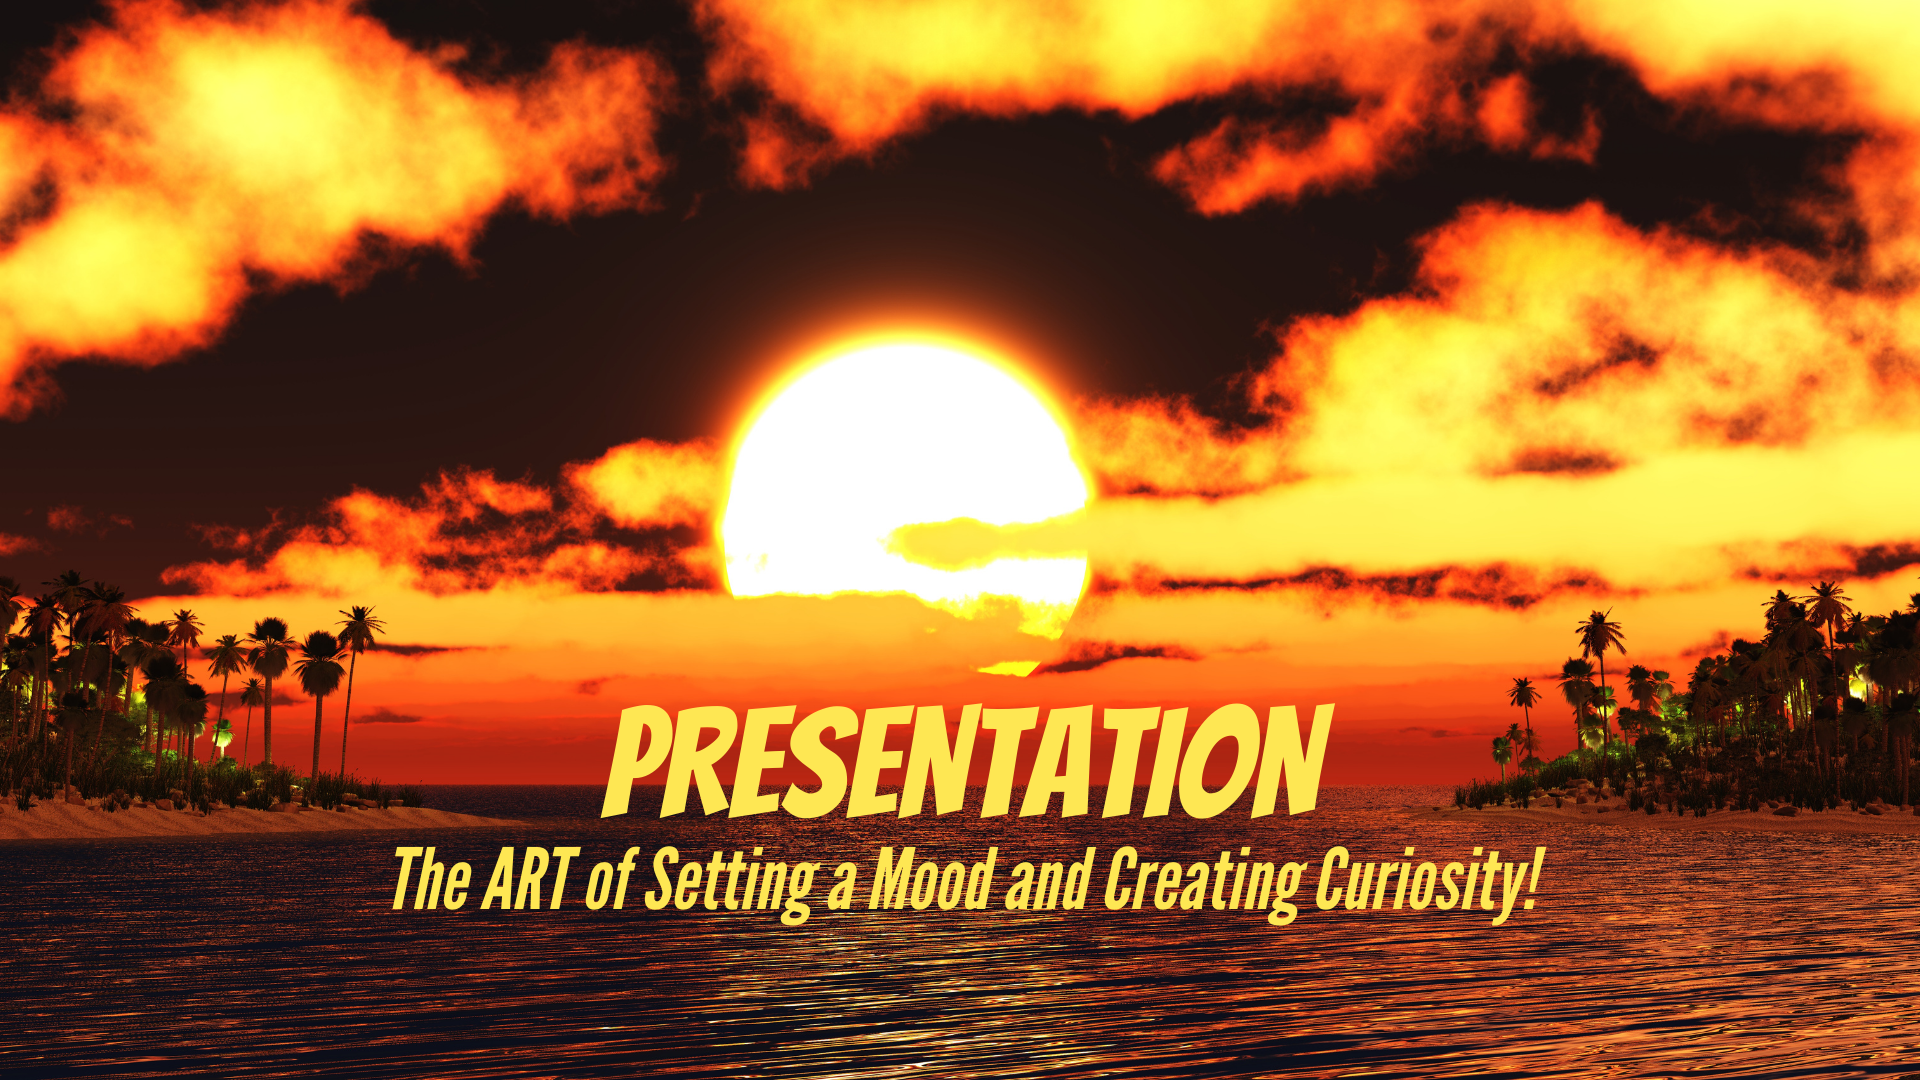 creating a mood and curiosity through presentation